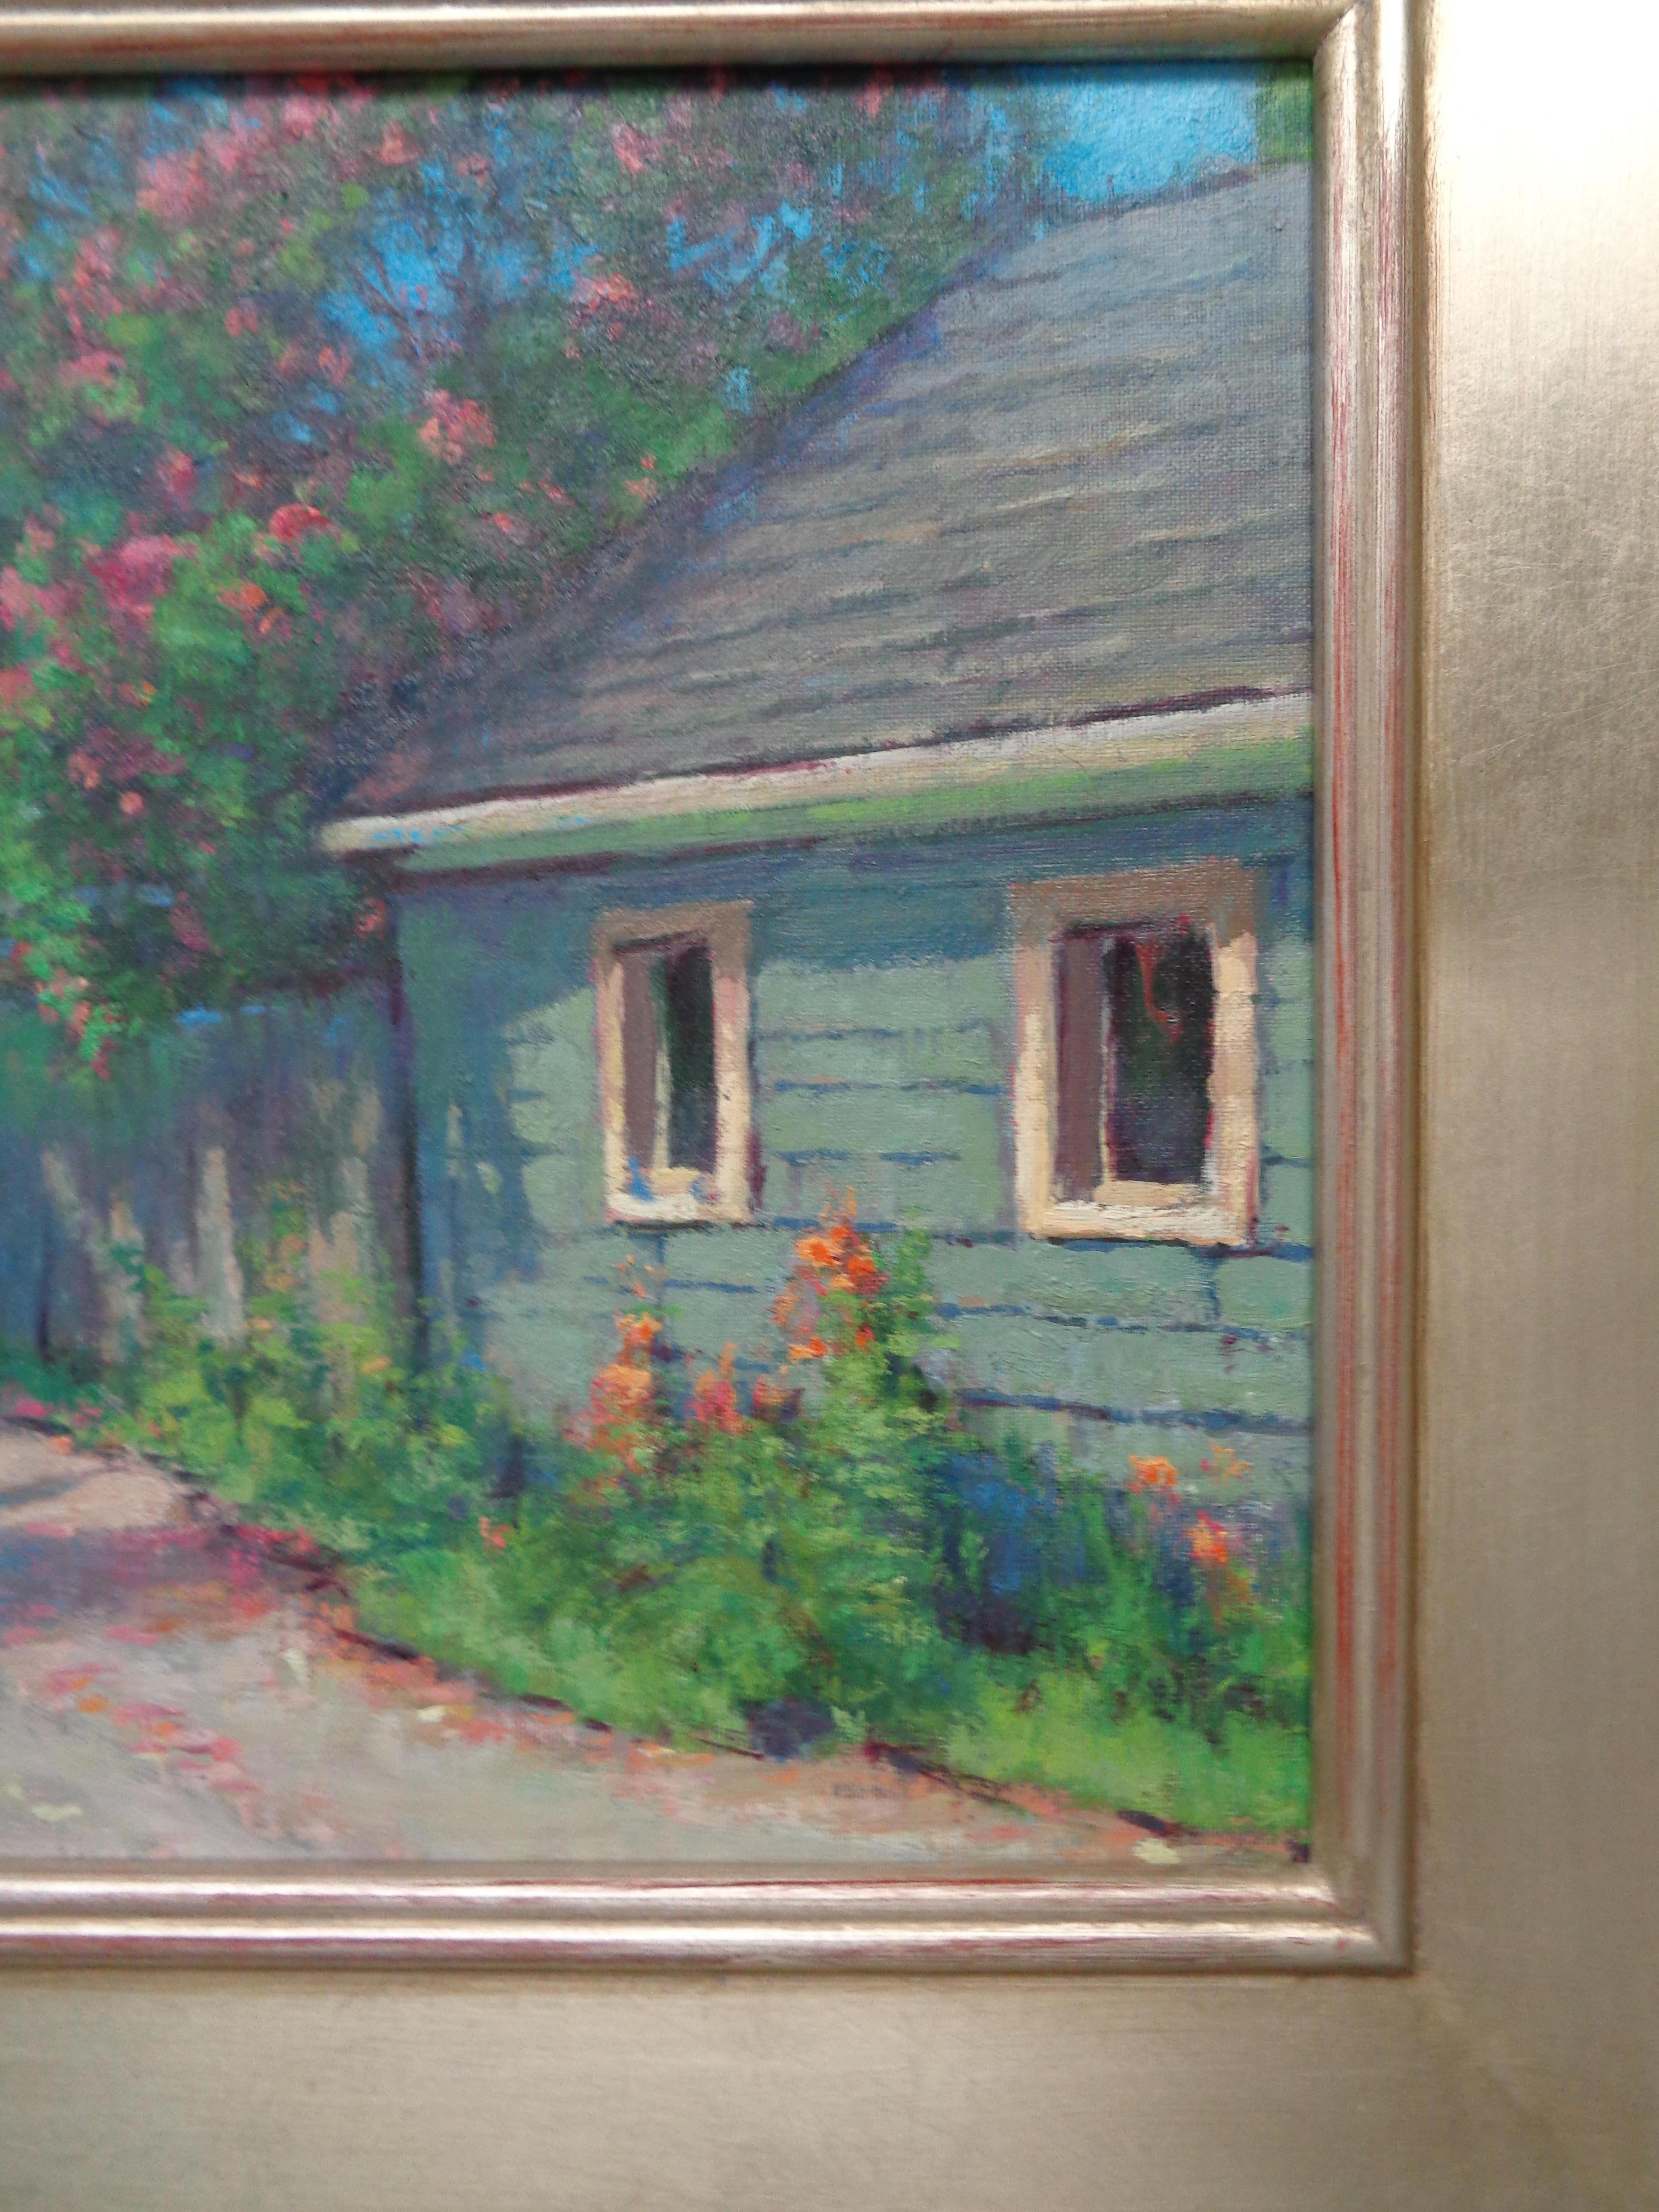  Impressionistic Floral Landscape Painting Michael Budden Alley Walk 3